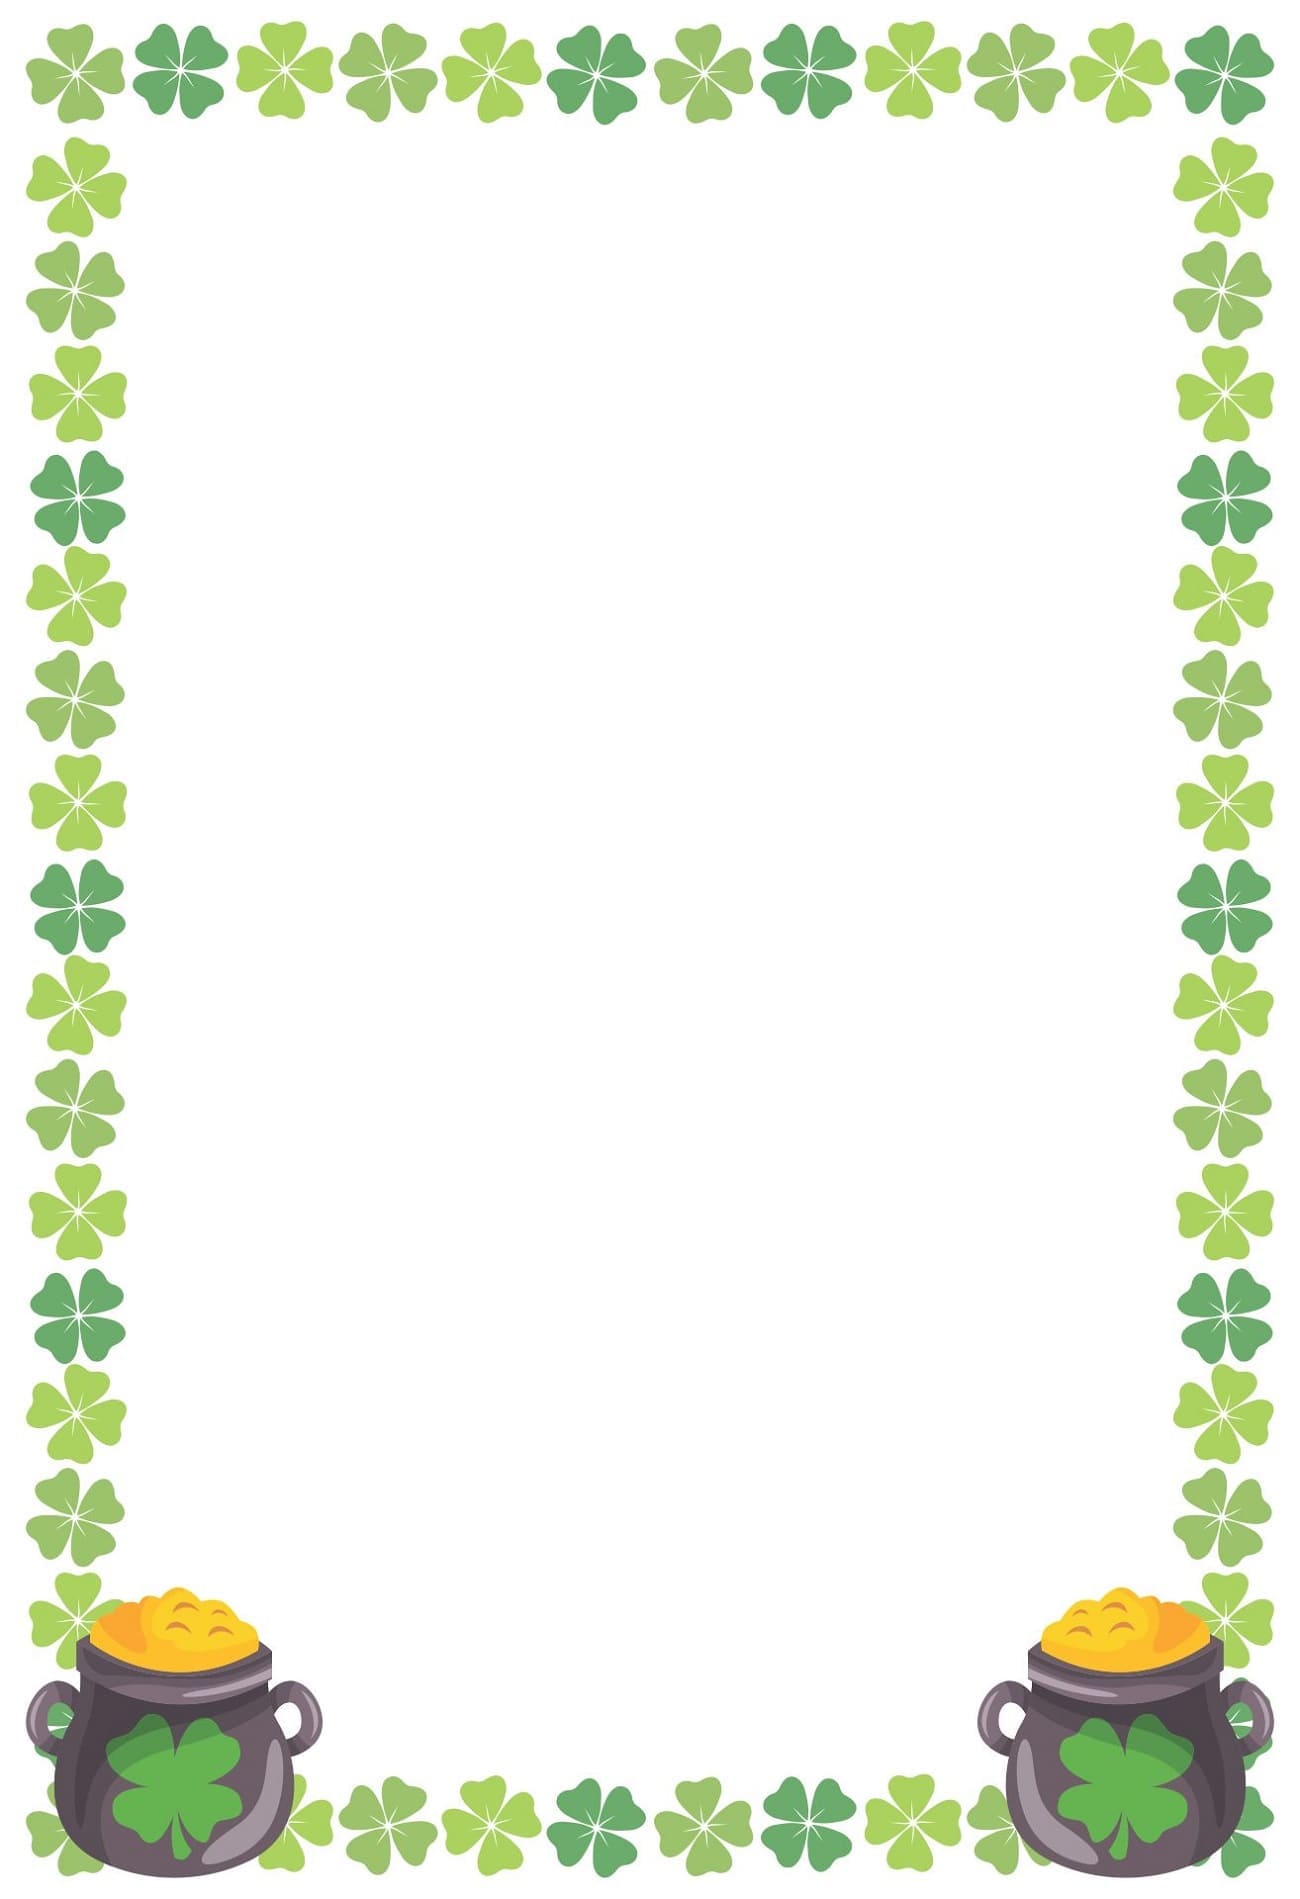 Printable Saint Patrick’s Day Border Image